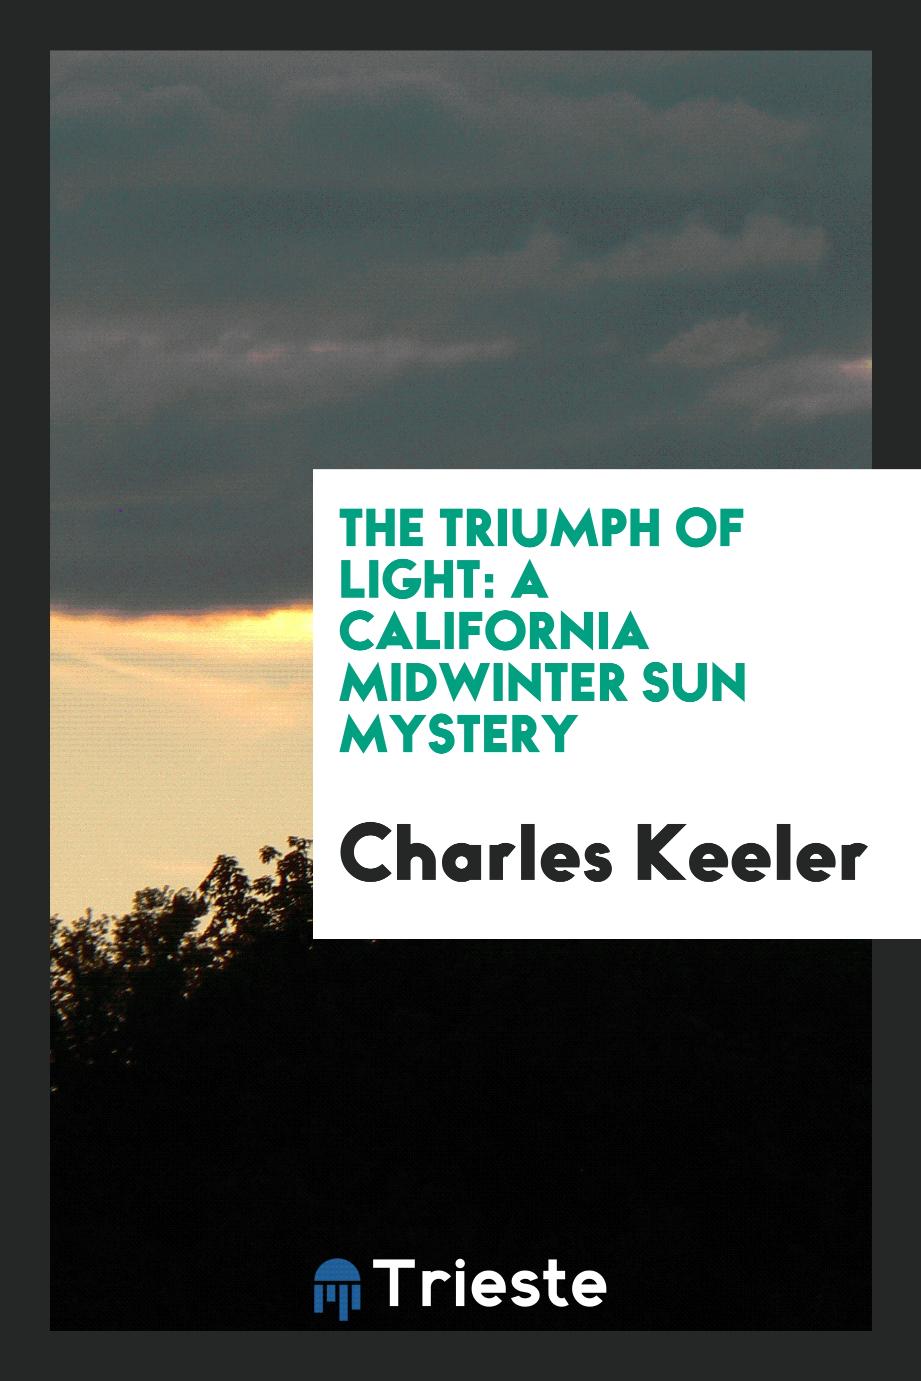 The triumph of light: a California midwinter sun mystery